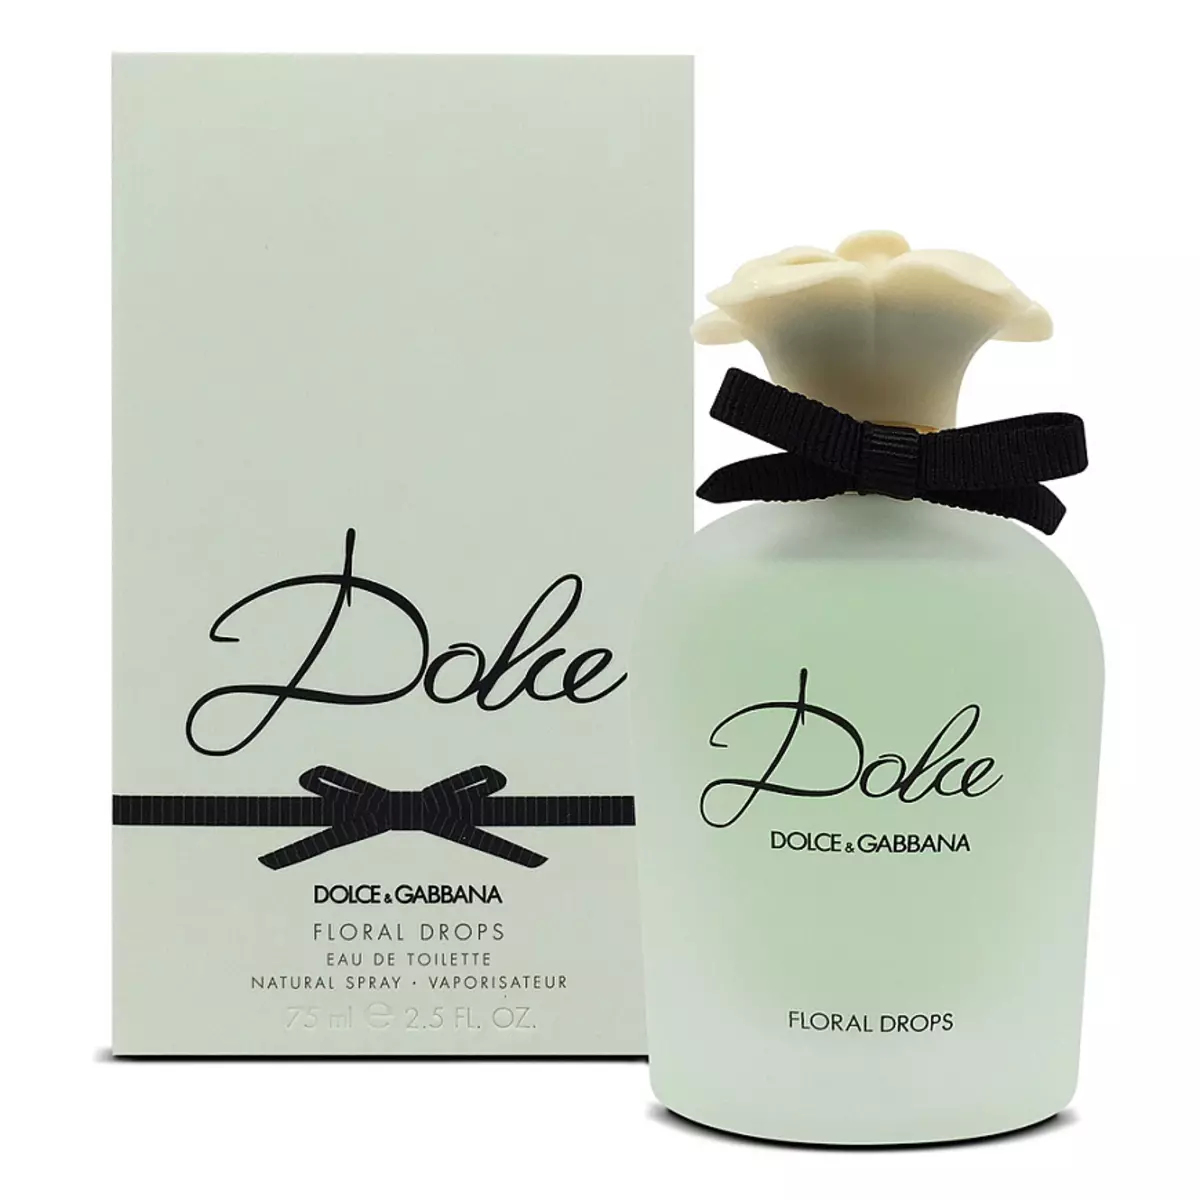 Perfume Dolce & Gabbana e outros perfumes (50 fotos): 3 L'Imperatrice, Feminino Eau de Toilette Azul, o único e outros sabores 25150_27